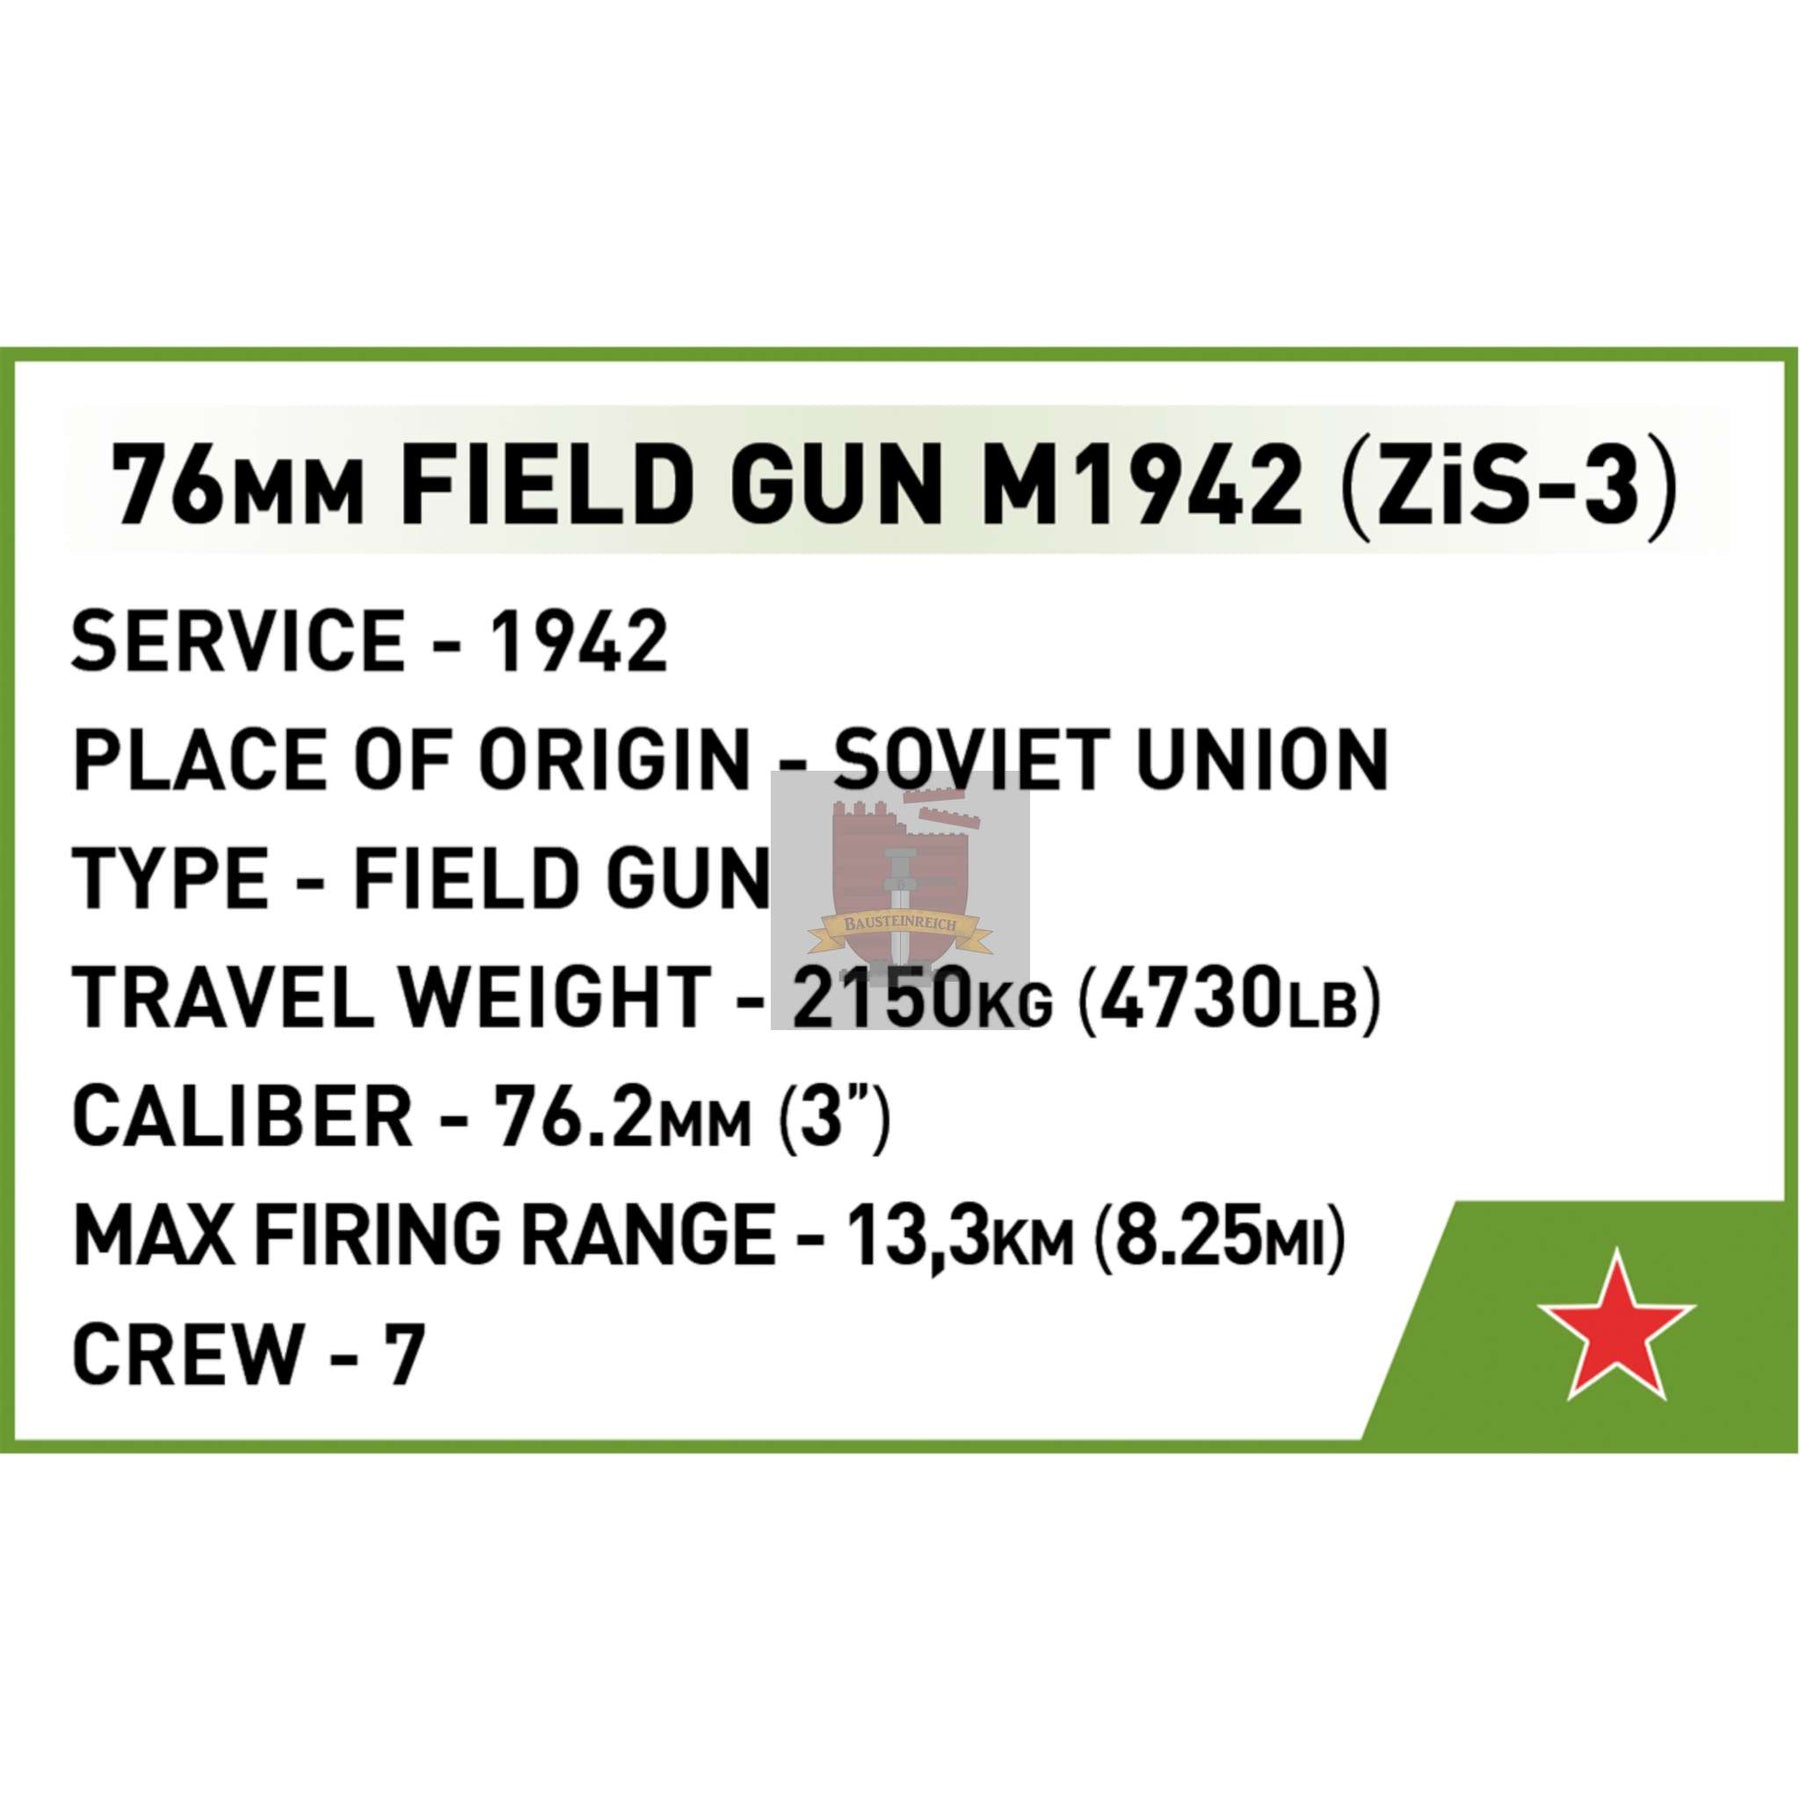 2293-ZIS-3 Soviet Gun (Cobi)